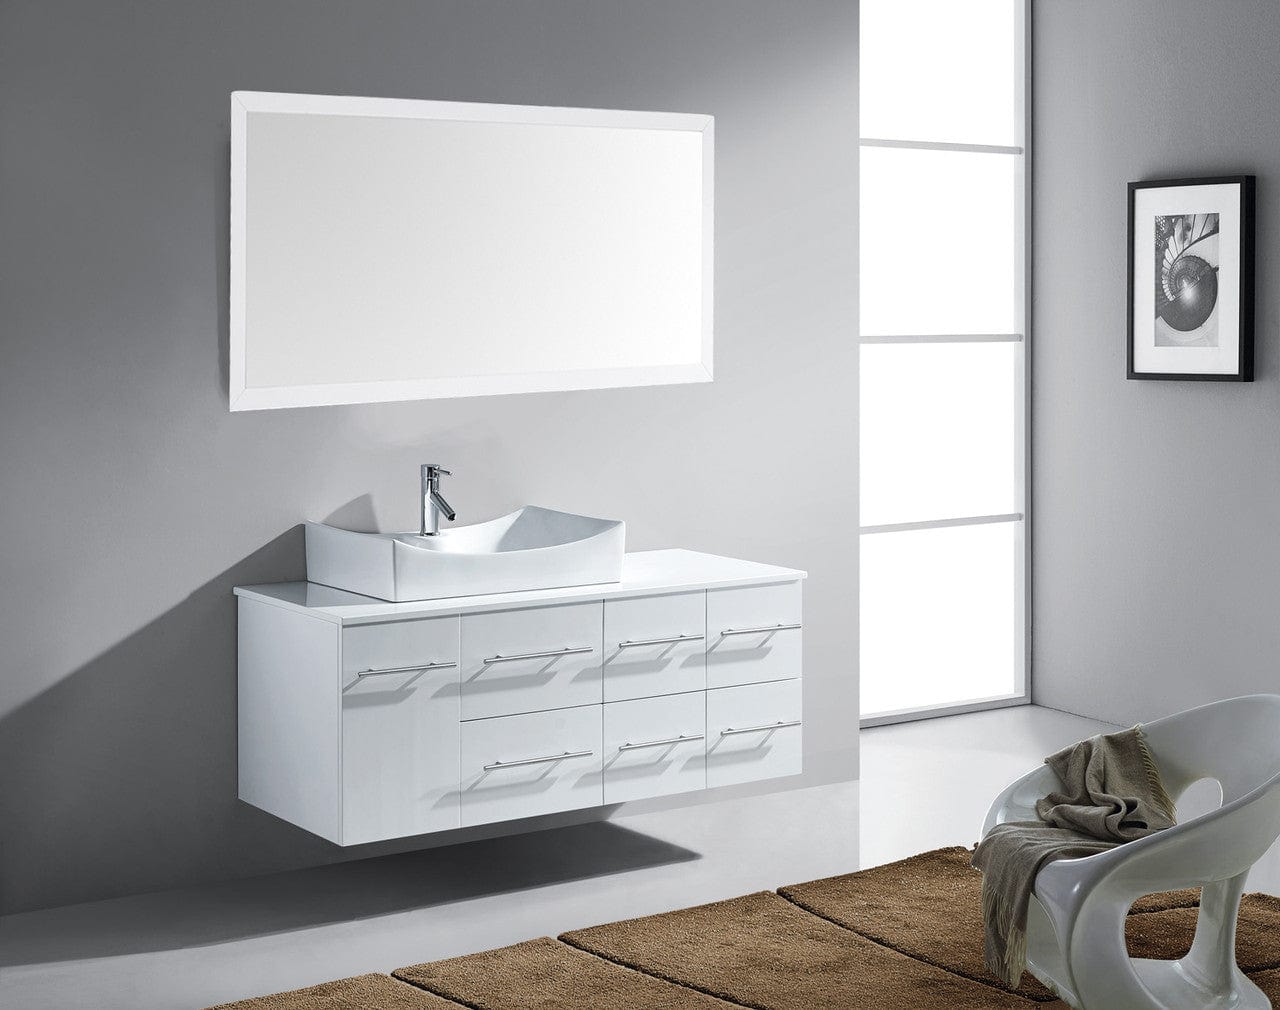 Virtu USA Ceanna 55 Single Bathroom Vanity Set in White side view